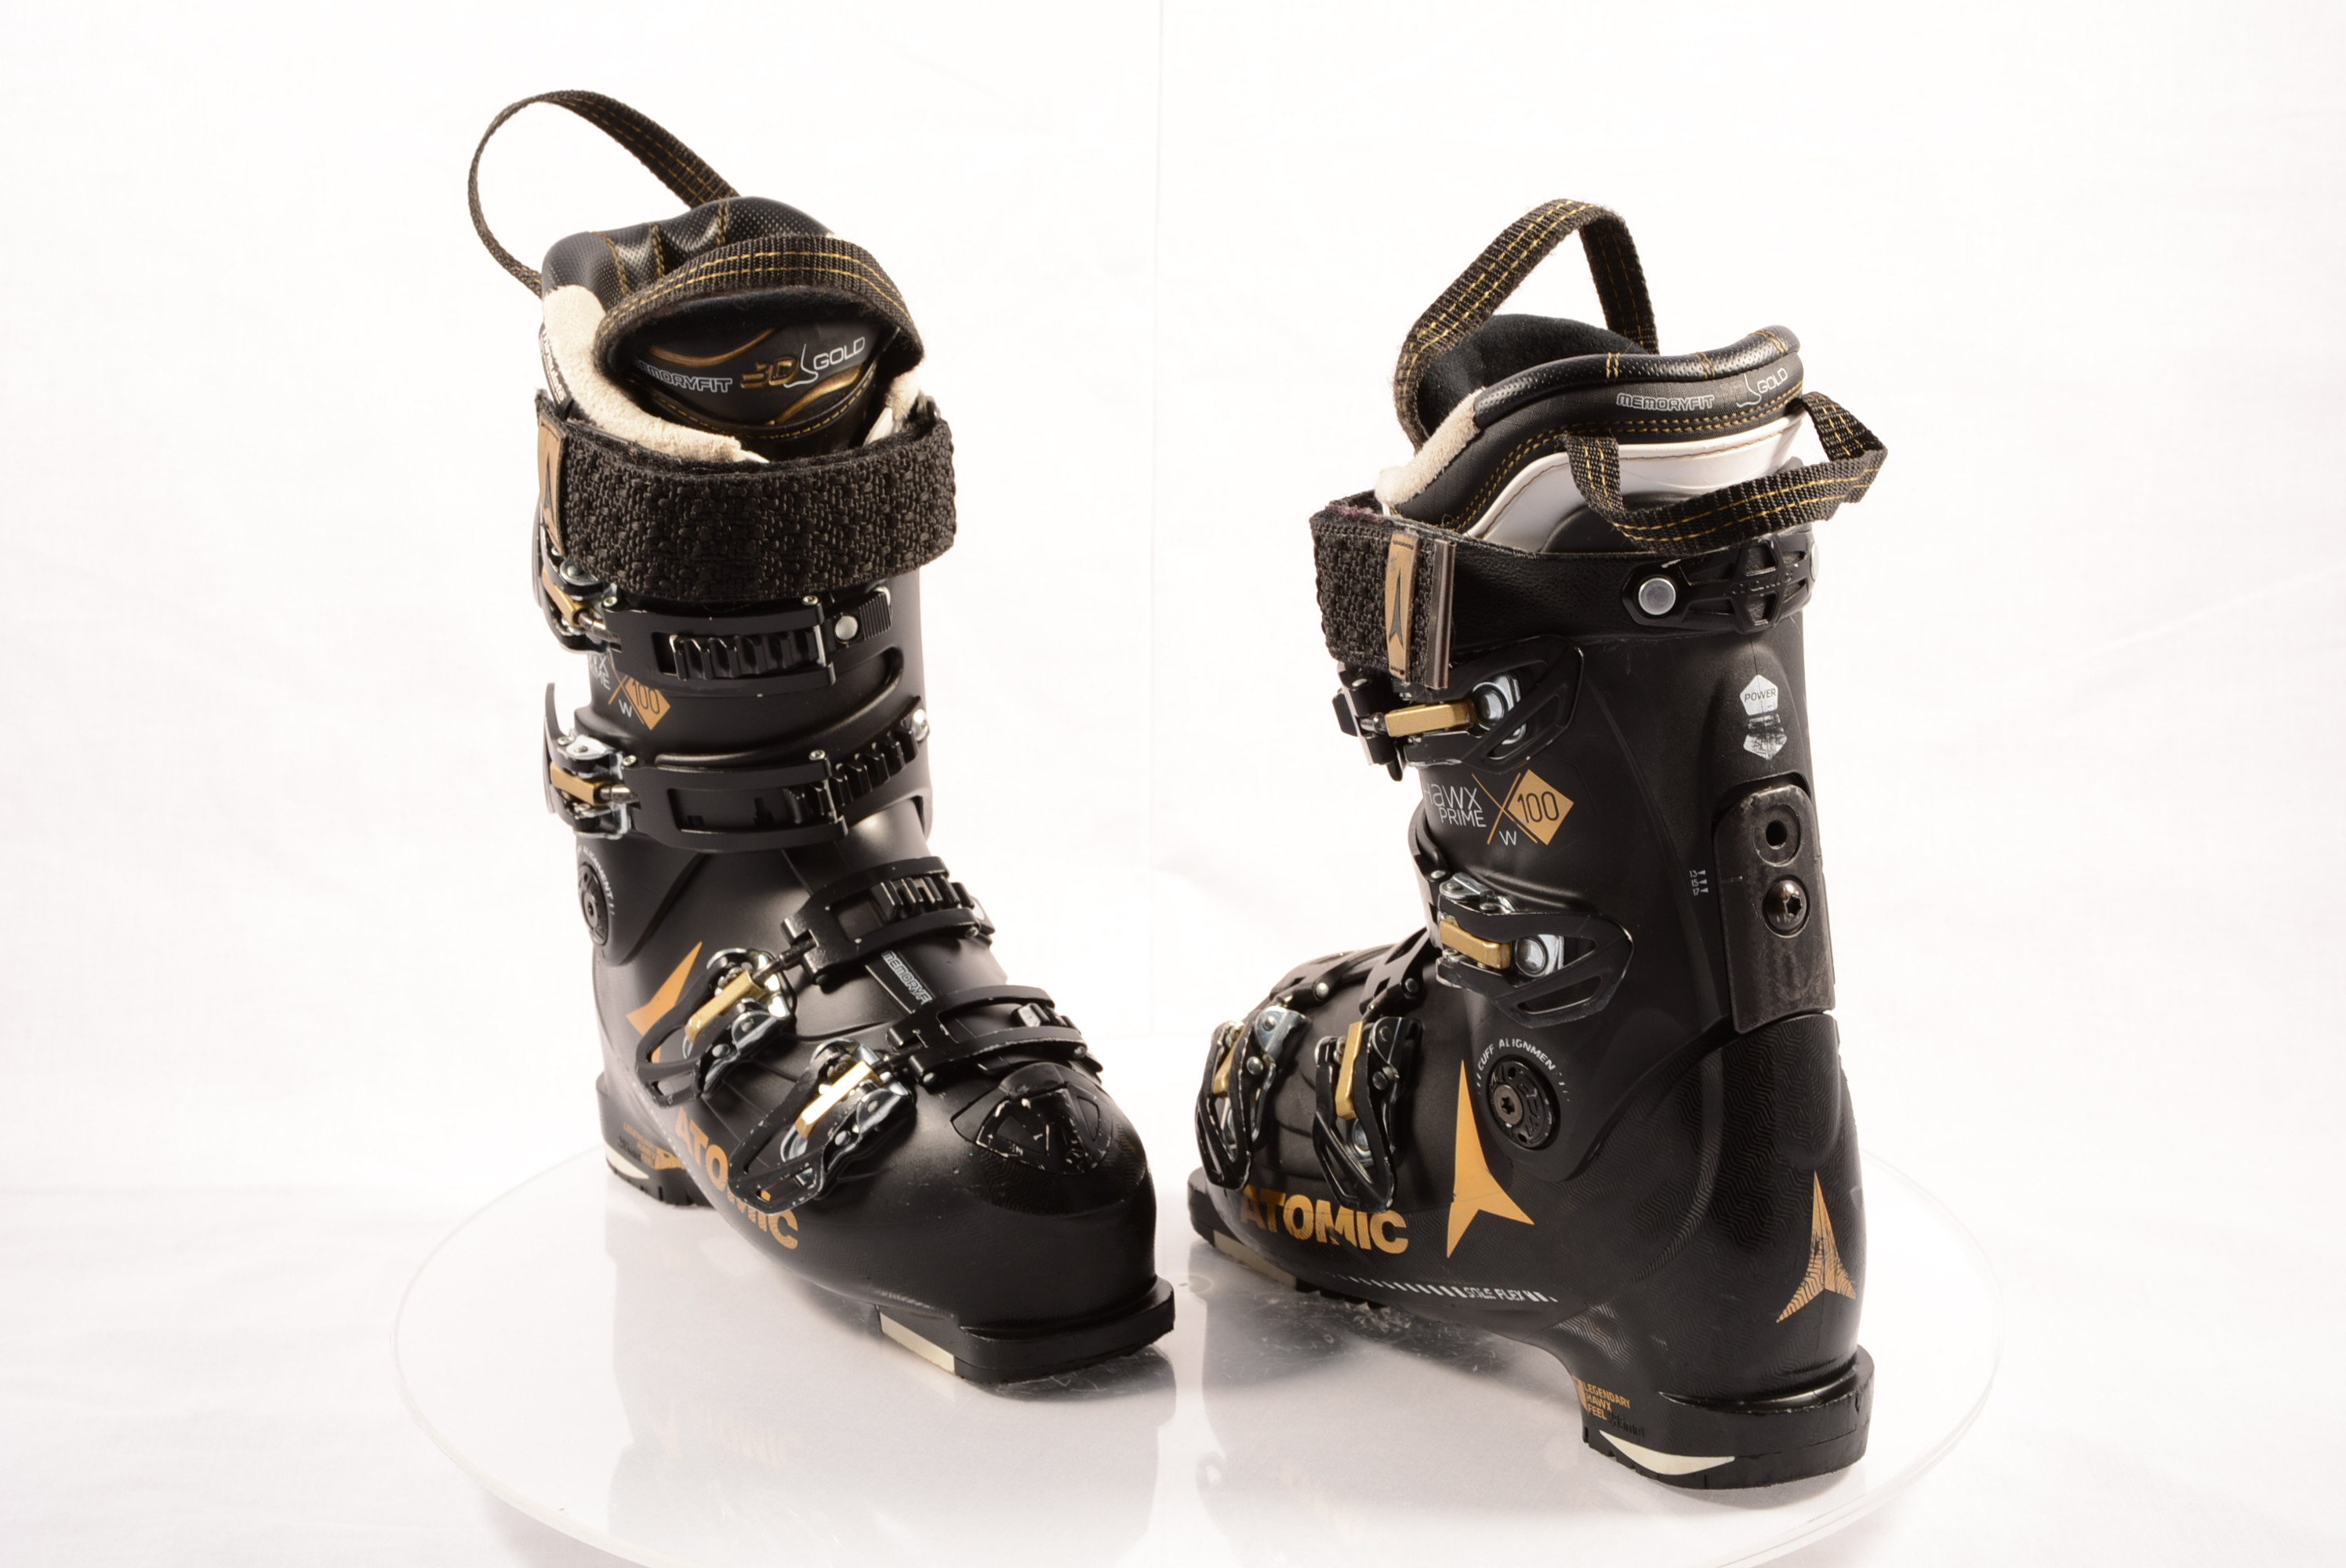 women's boots ATOMIC HAWX PRIME 100 MEMORY FIT, 3D GOLD, SOLE FLEX, canting ( TOP condition ) - Mardosport.com